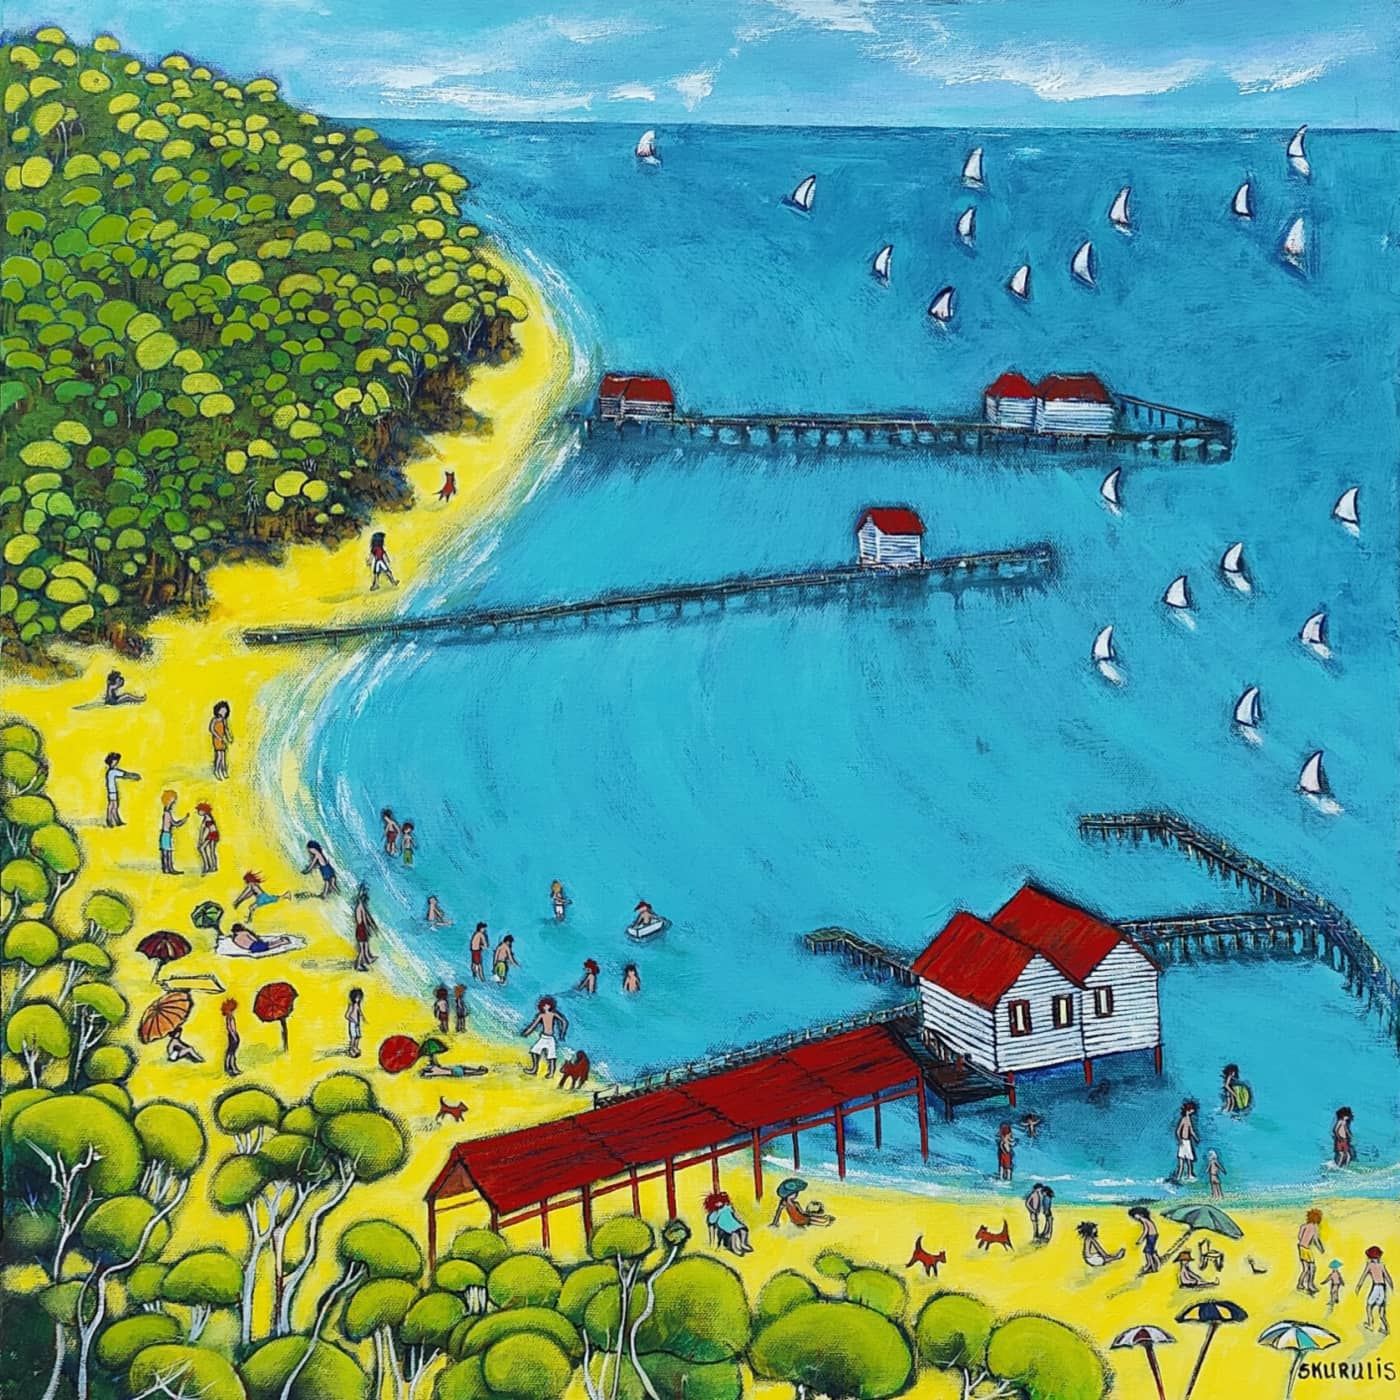 Tasmanian-Based Australian Artist Beverley Skurulis Painting ~ 'Sea You at Sorrento' - Curate Art & Design Gallery Sorrento Victoria